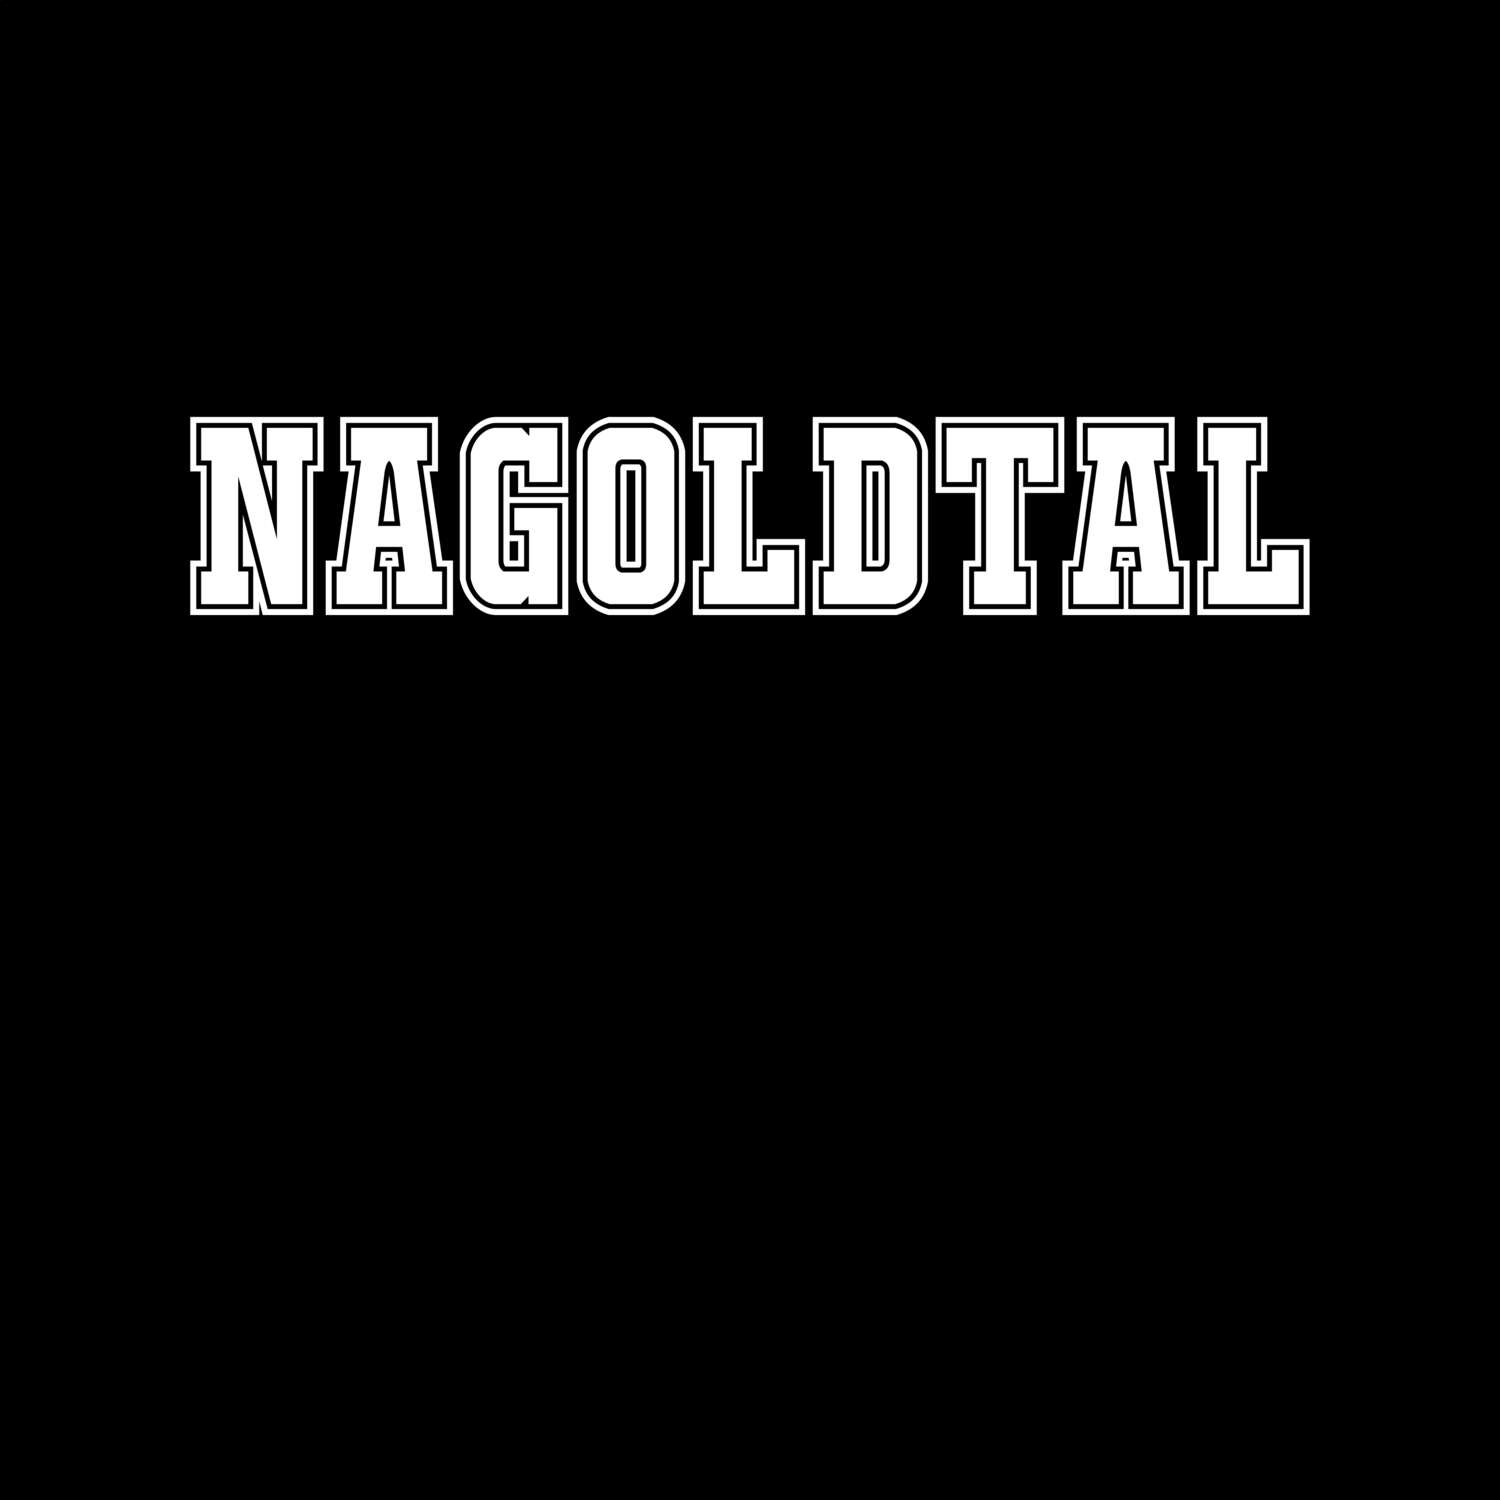 Nagoldtal T-Shirt »Classic«